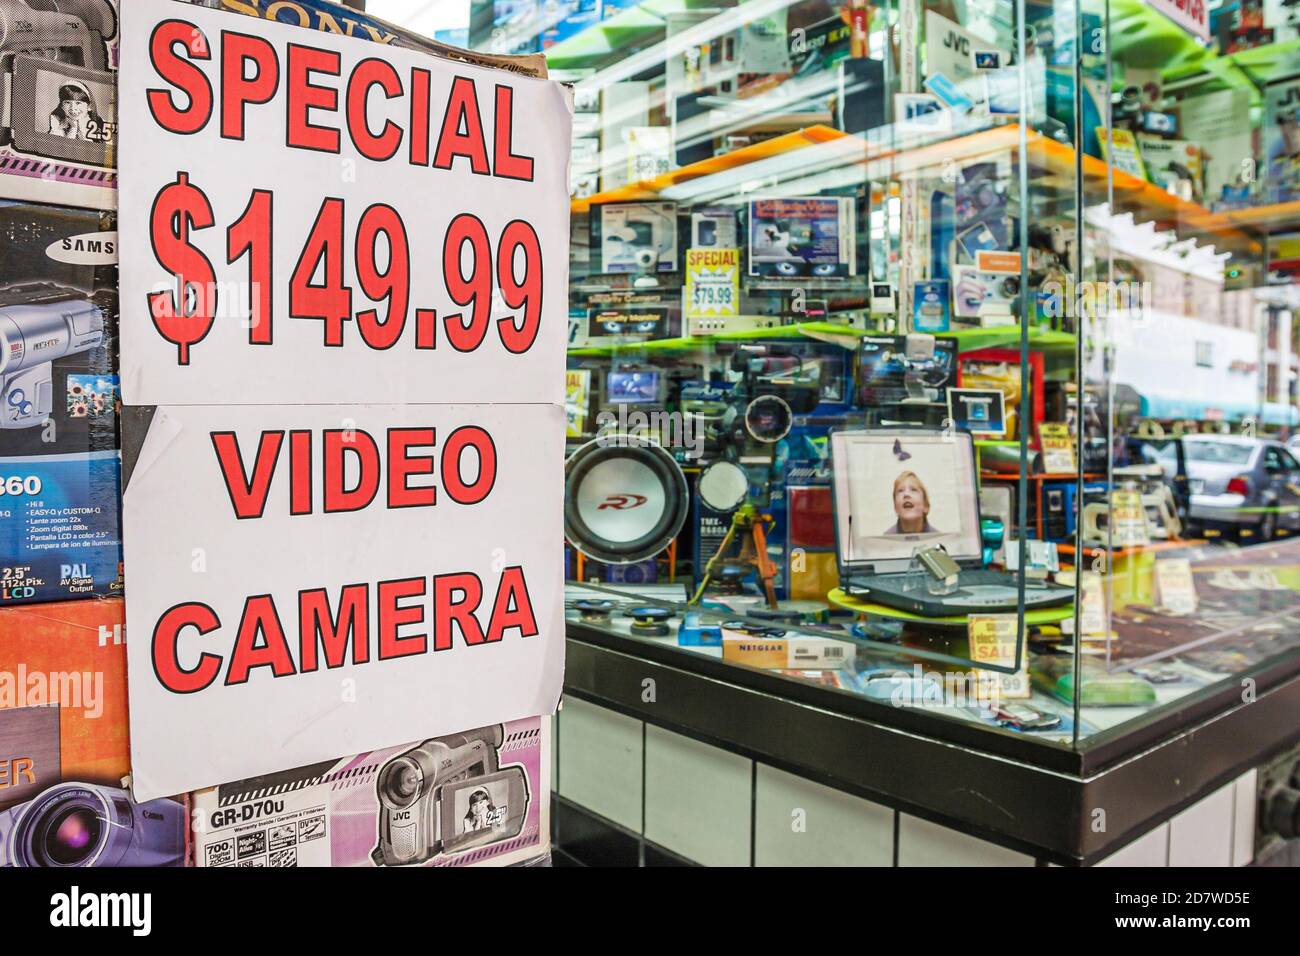 Miami Florida,Flagler Street electronics store entrance,special $149.99 Video Camera, Stock Photo